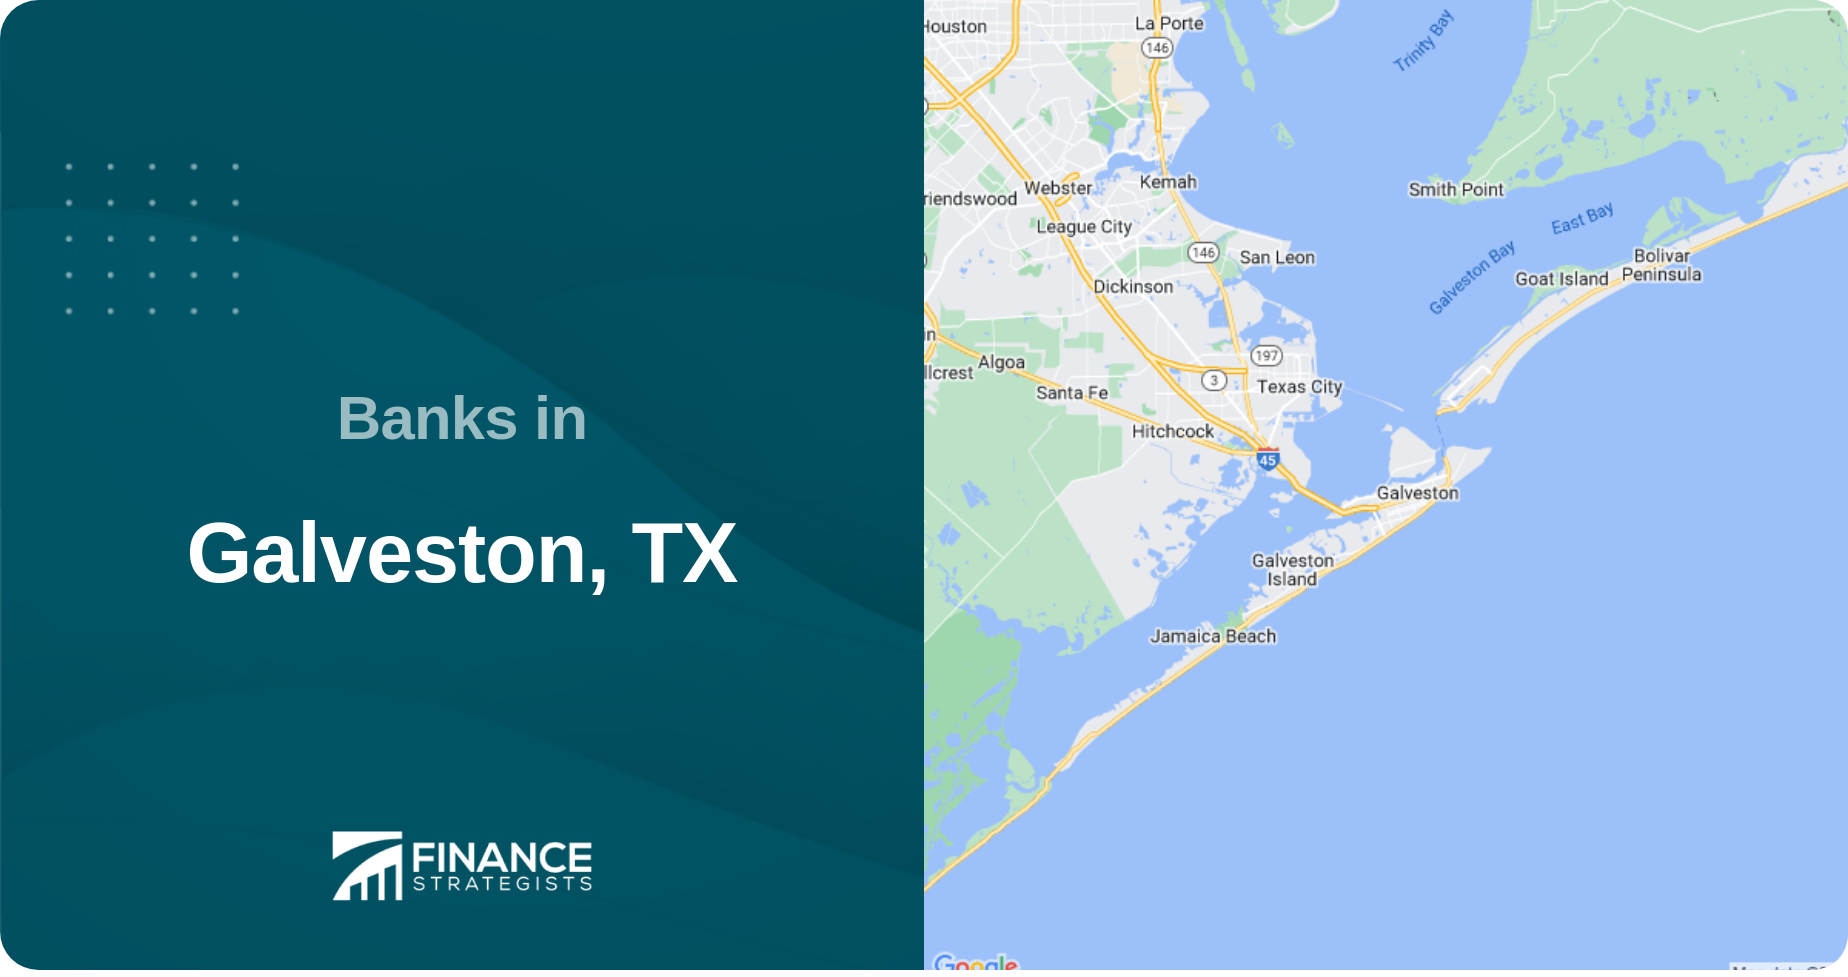 Banks in Galveston, TX